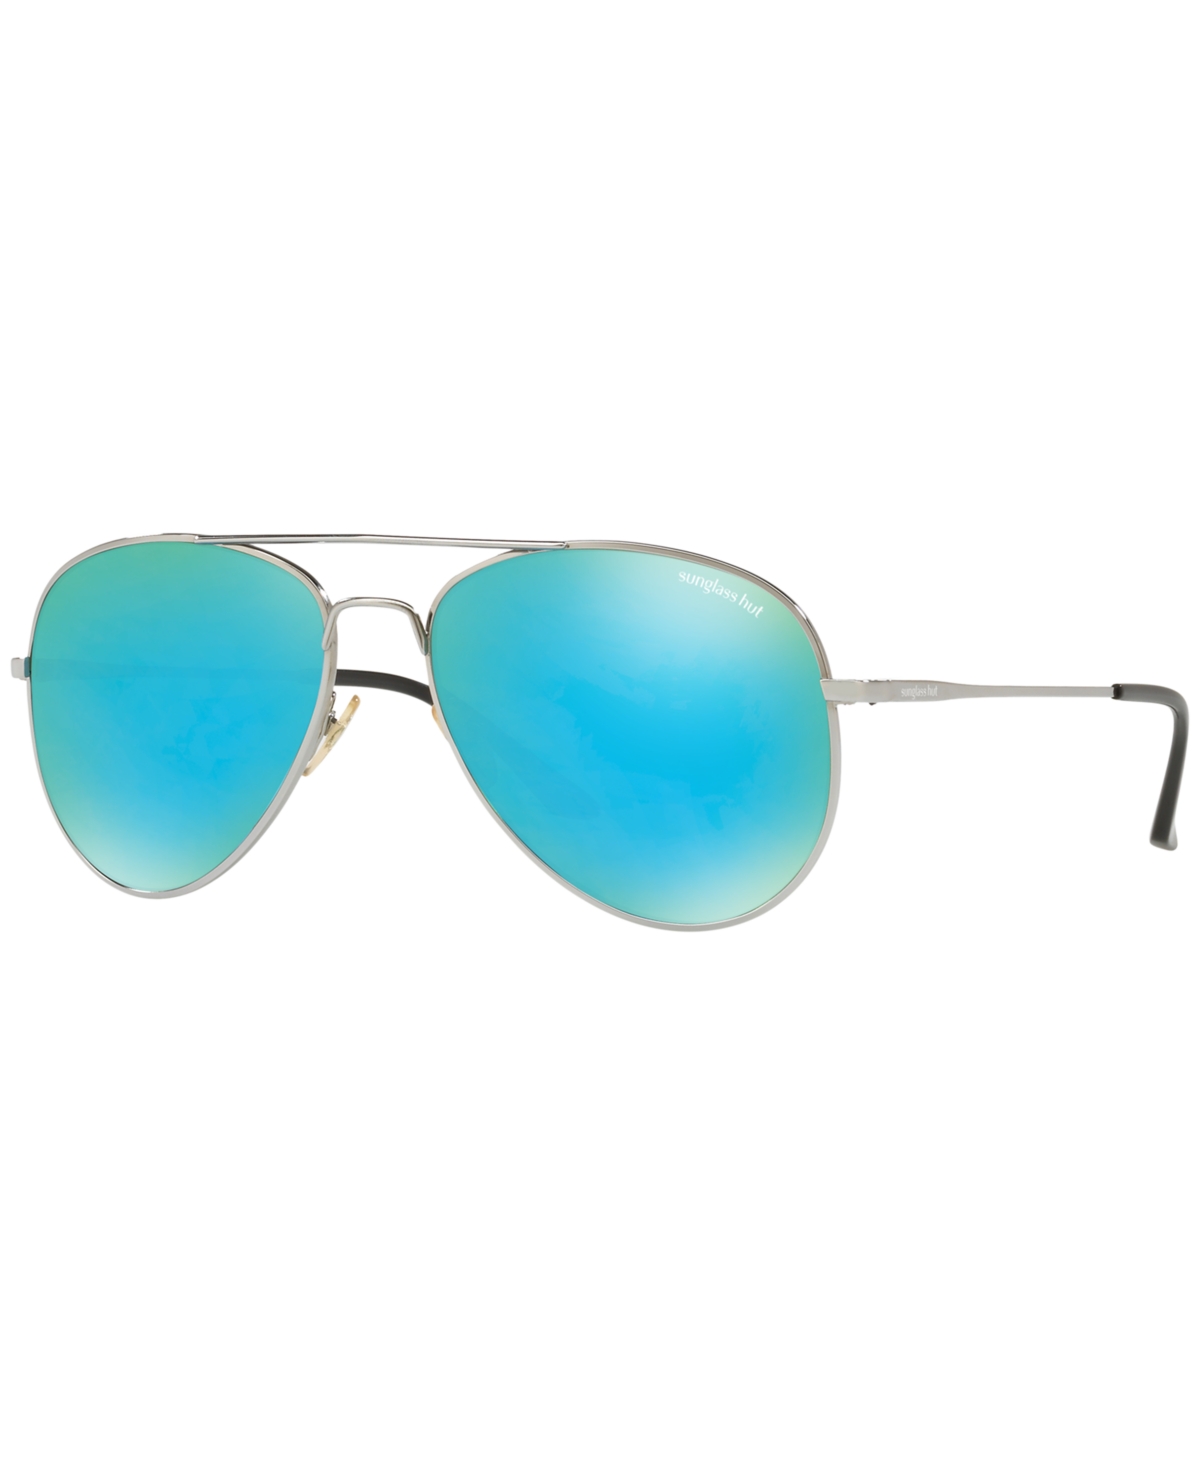 Sunglasses, HU1001 59 - GUNMETAL/GREY MIRROR